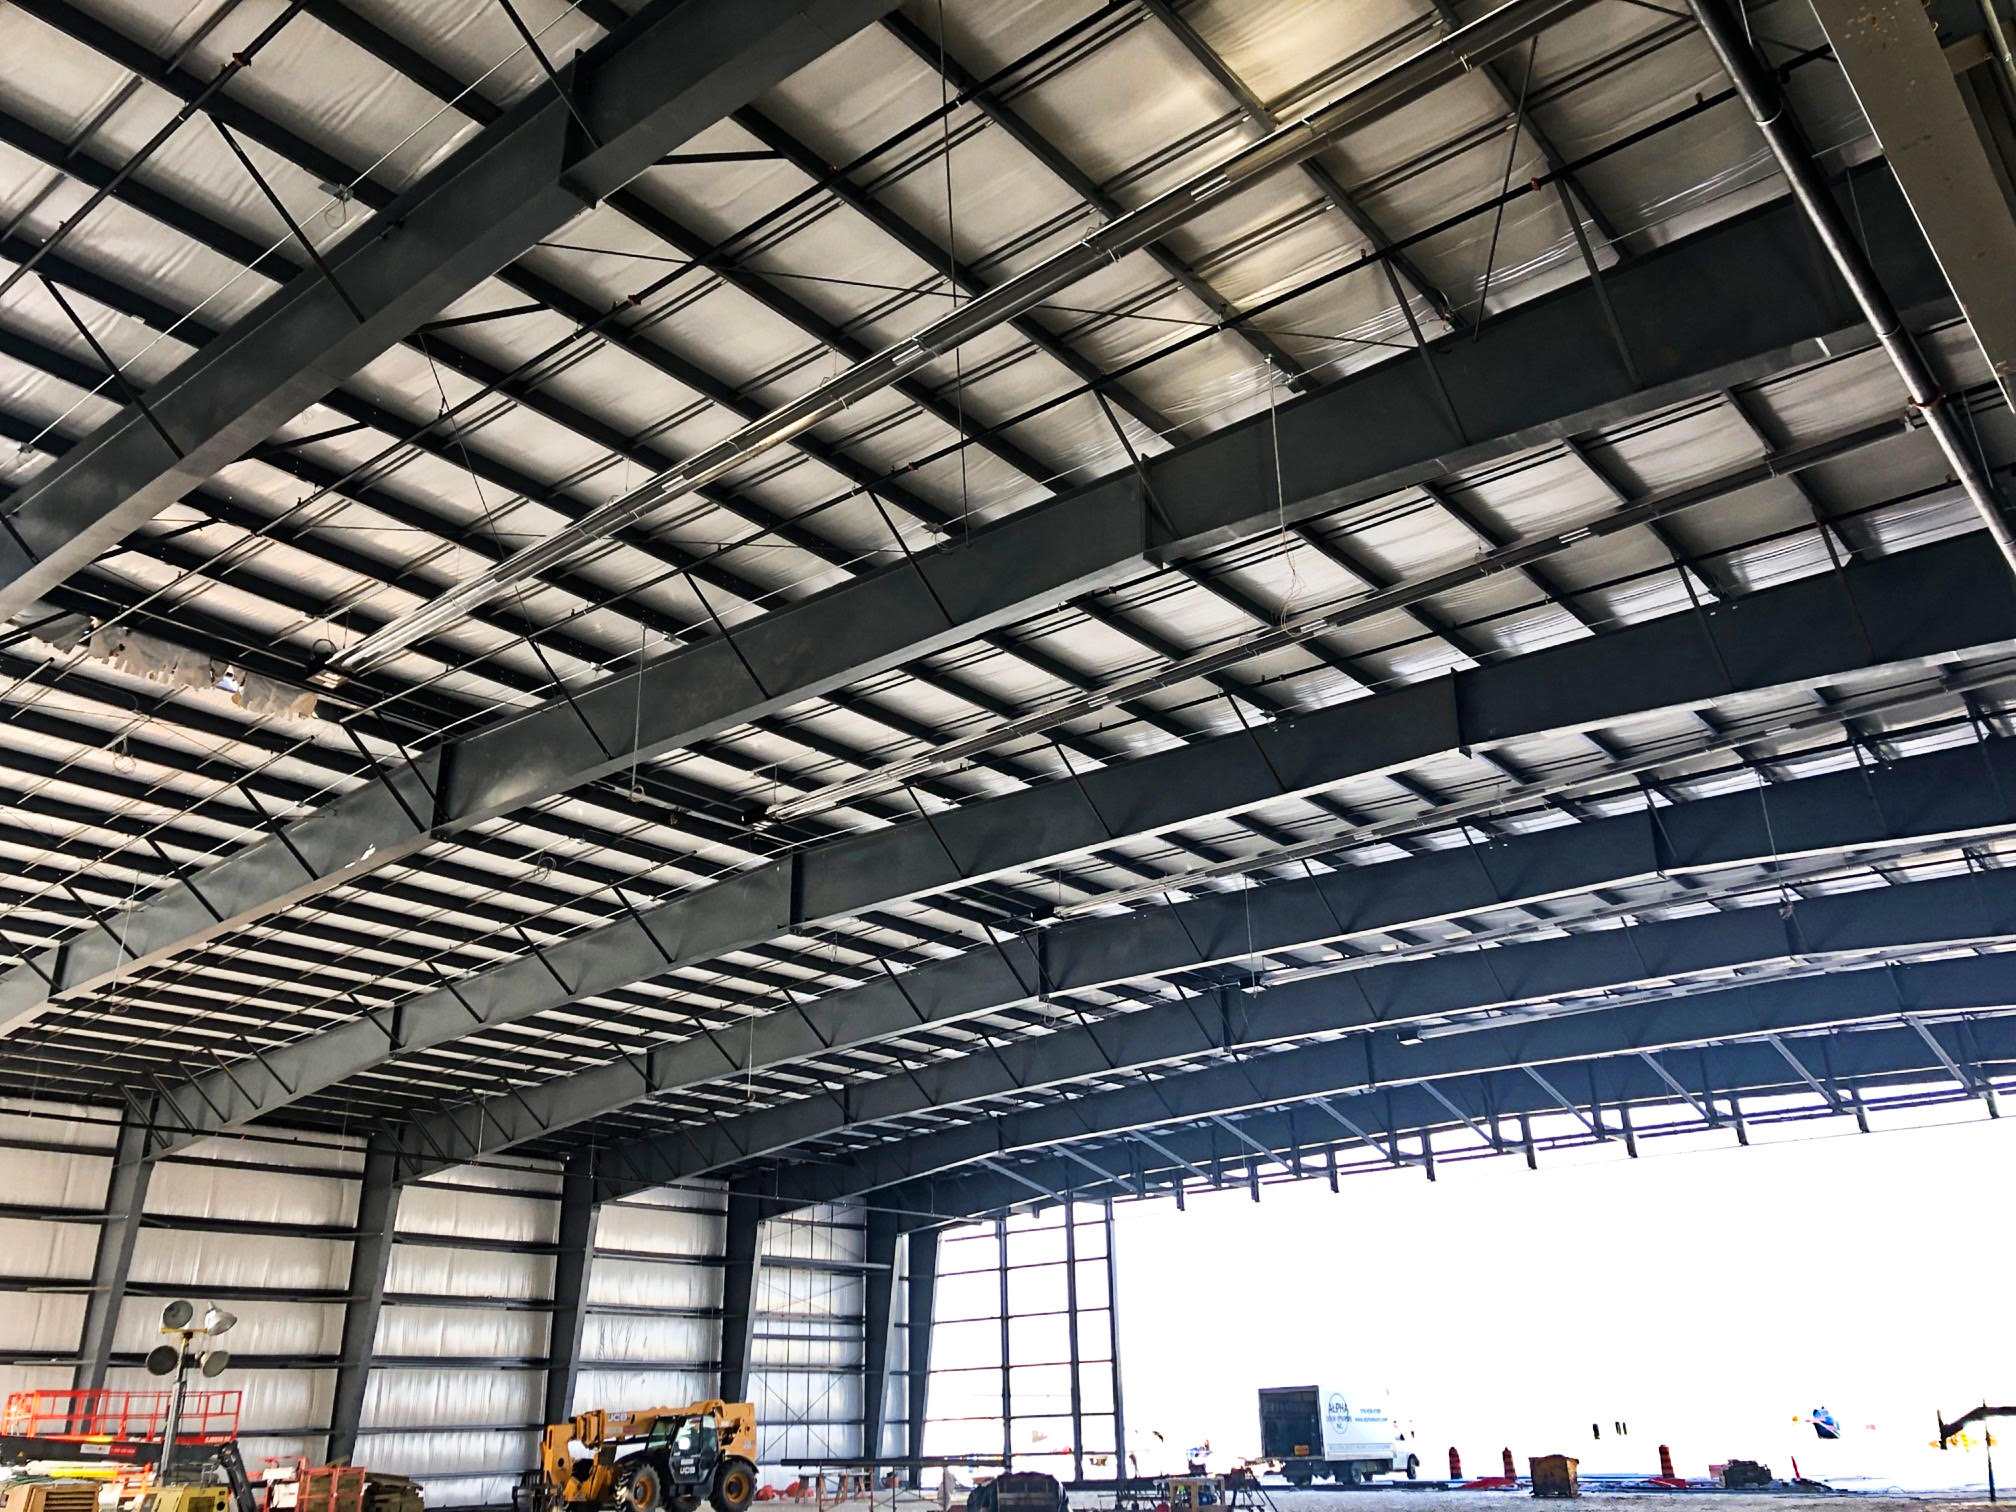 Roof of a hangar